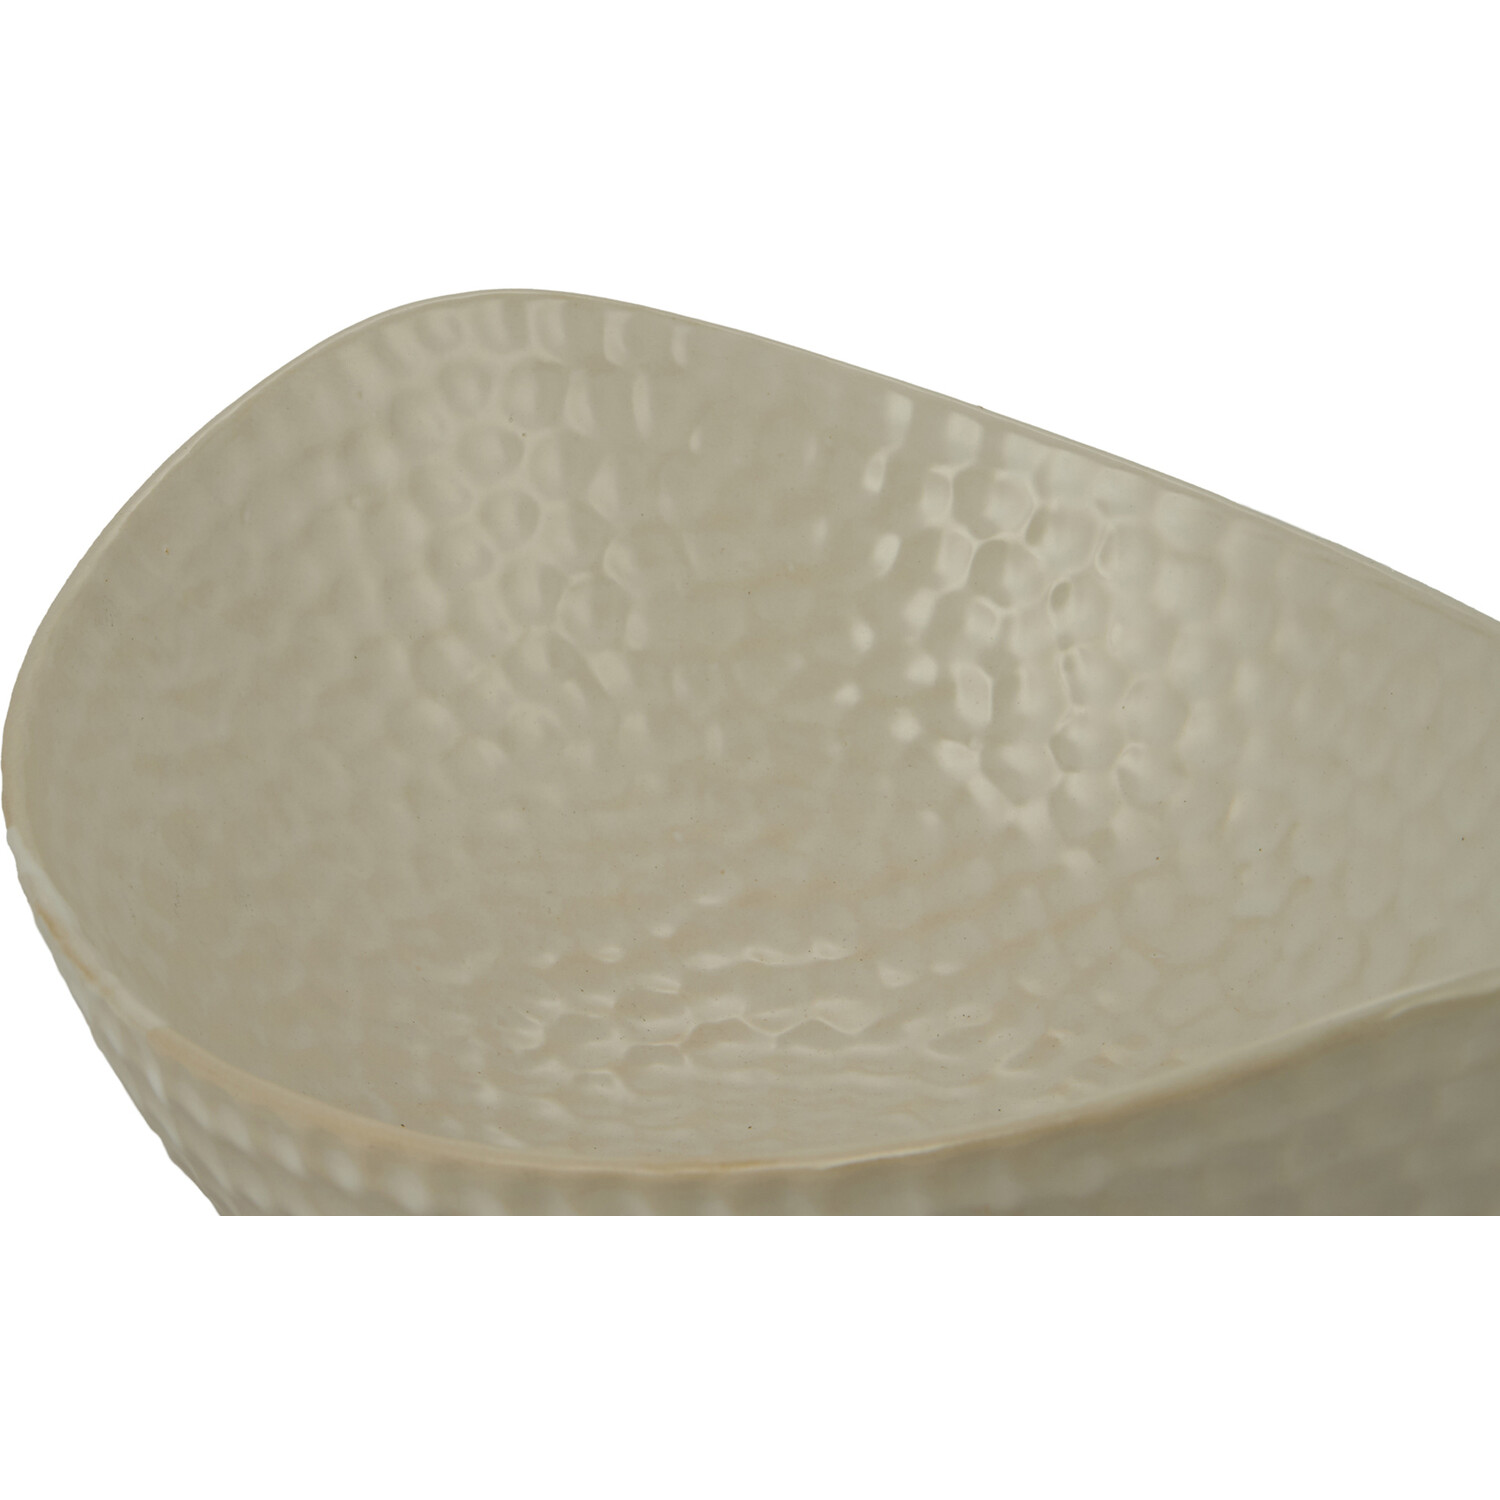 Hammered Matte Bowl - White Image 3